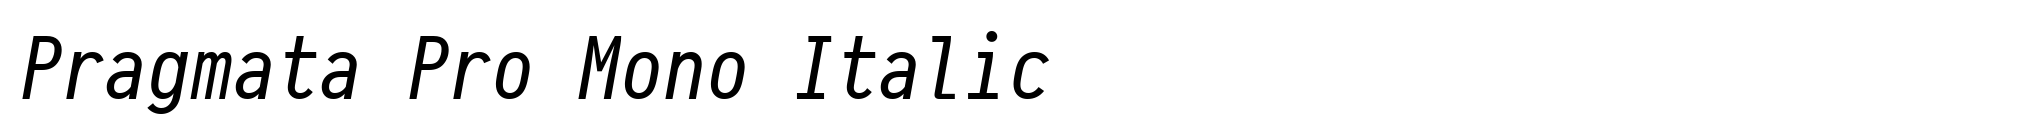 Pragmata Pro Mono Italic image